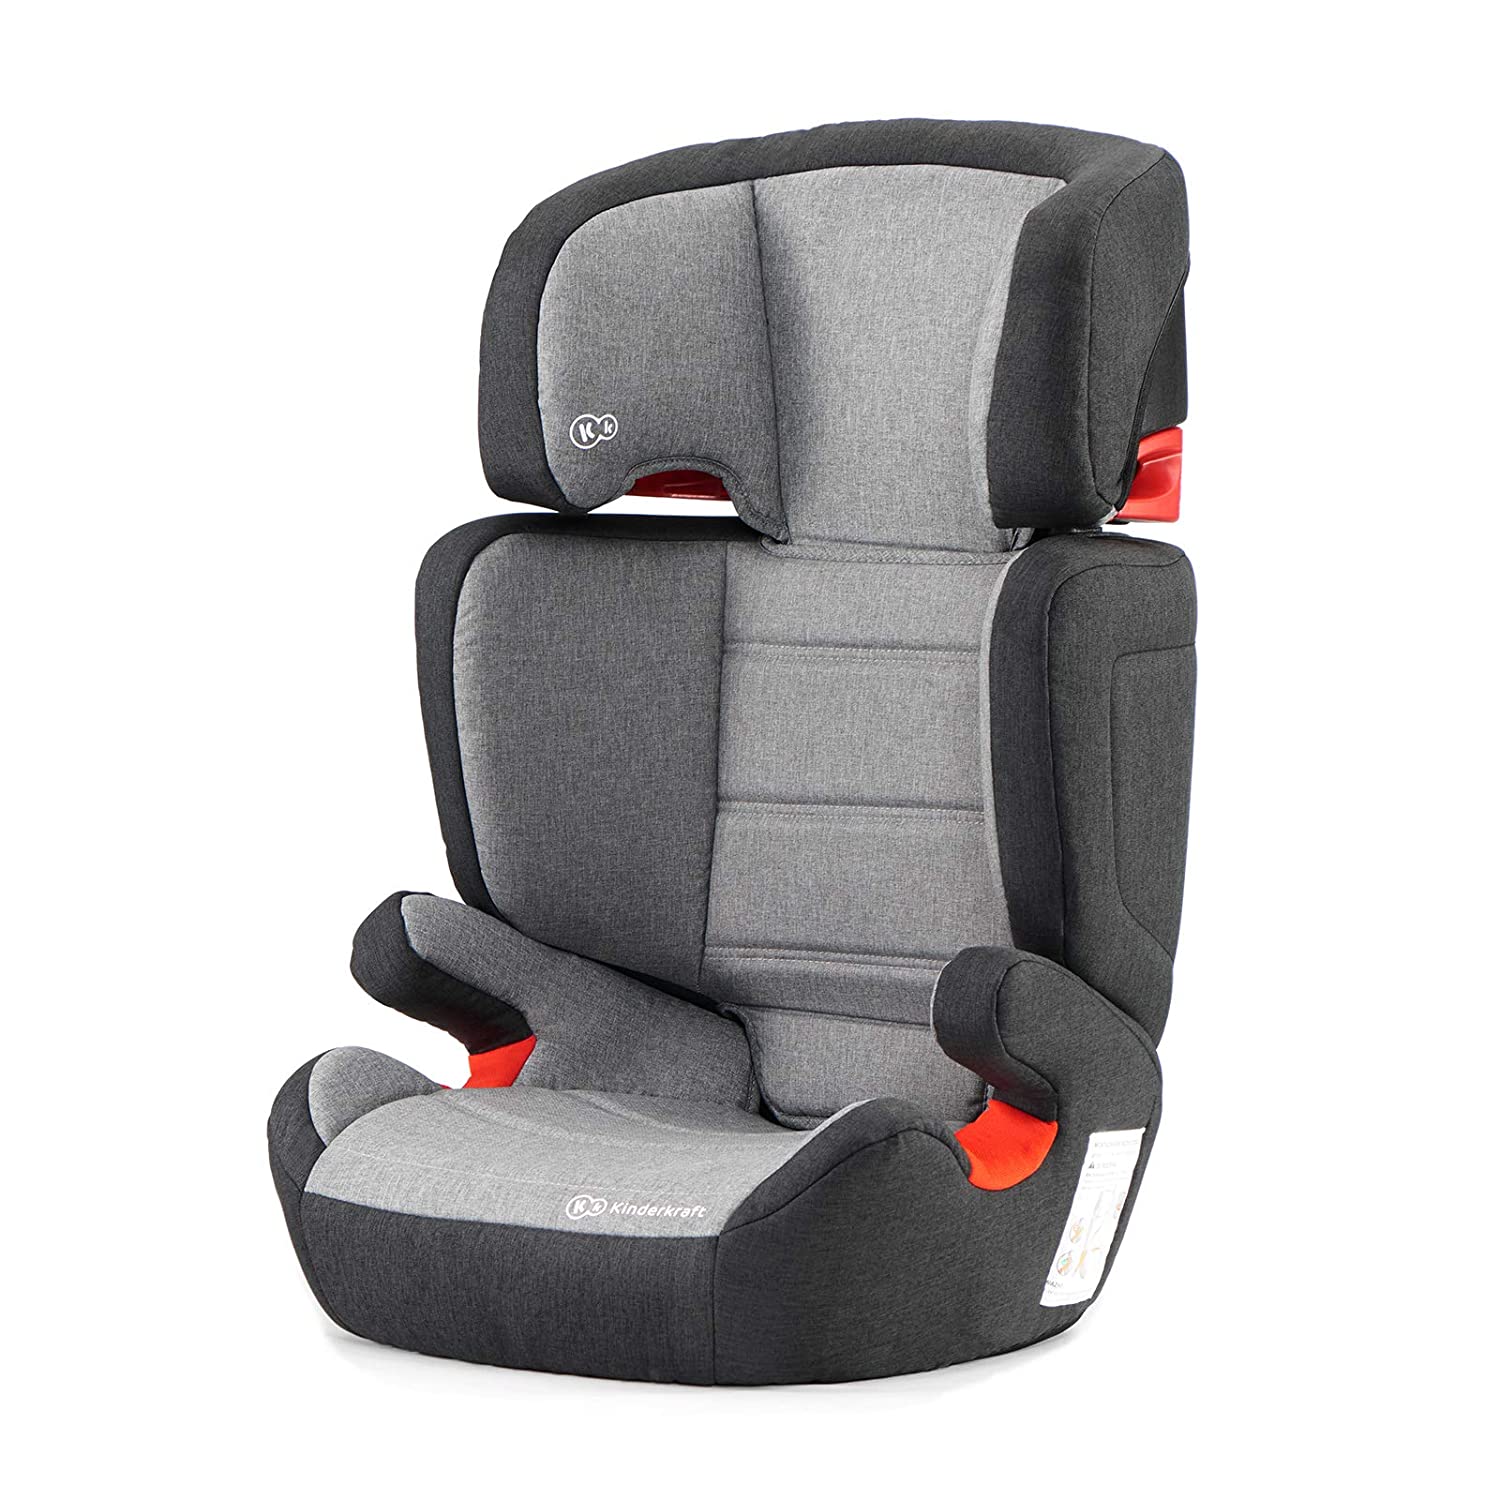 kk Kinderkraft Kinderkraft Juniorfix Child Car Seat, Child Car Seat, Child Seat with Isofix, Group 2/3 15-36 kg, Adjustable Backrest and Headrest, ECE R44/04, Blue